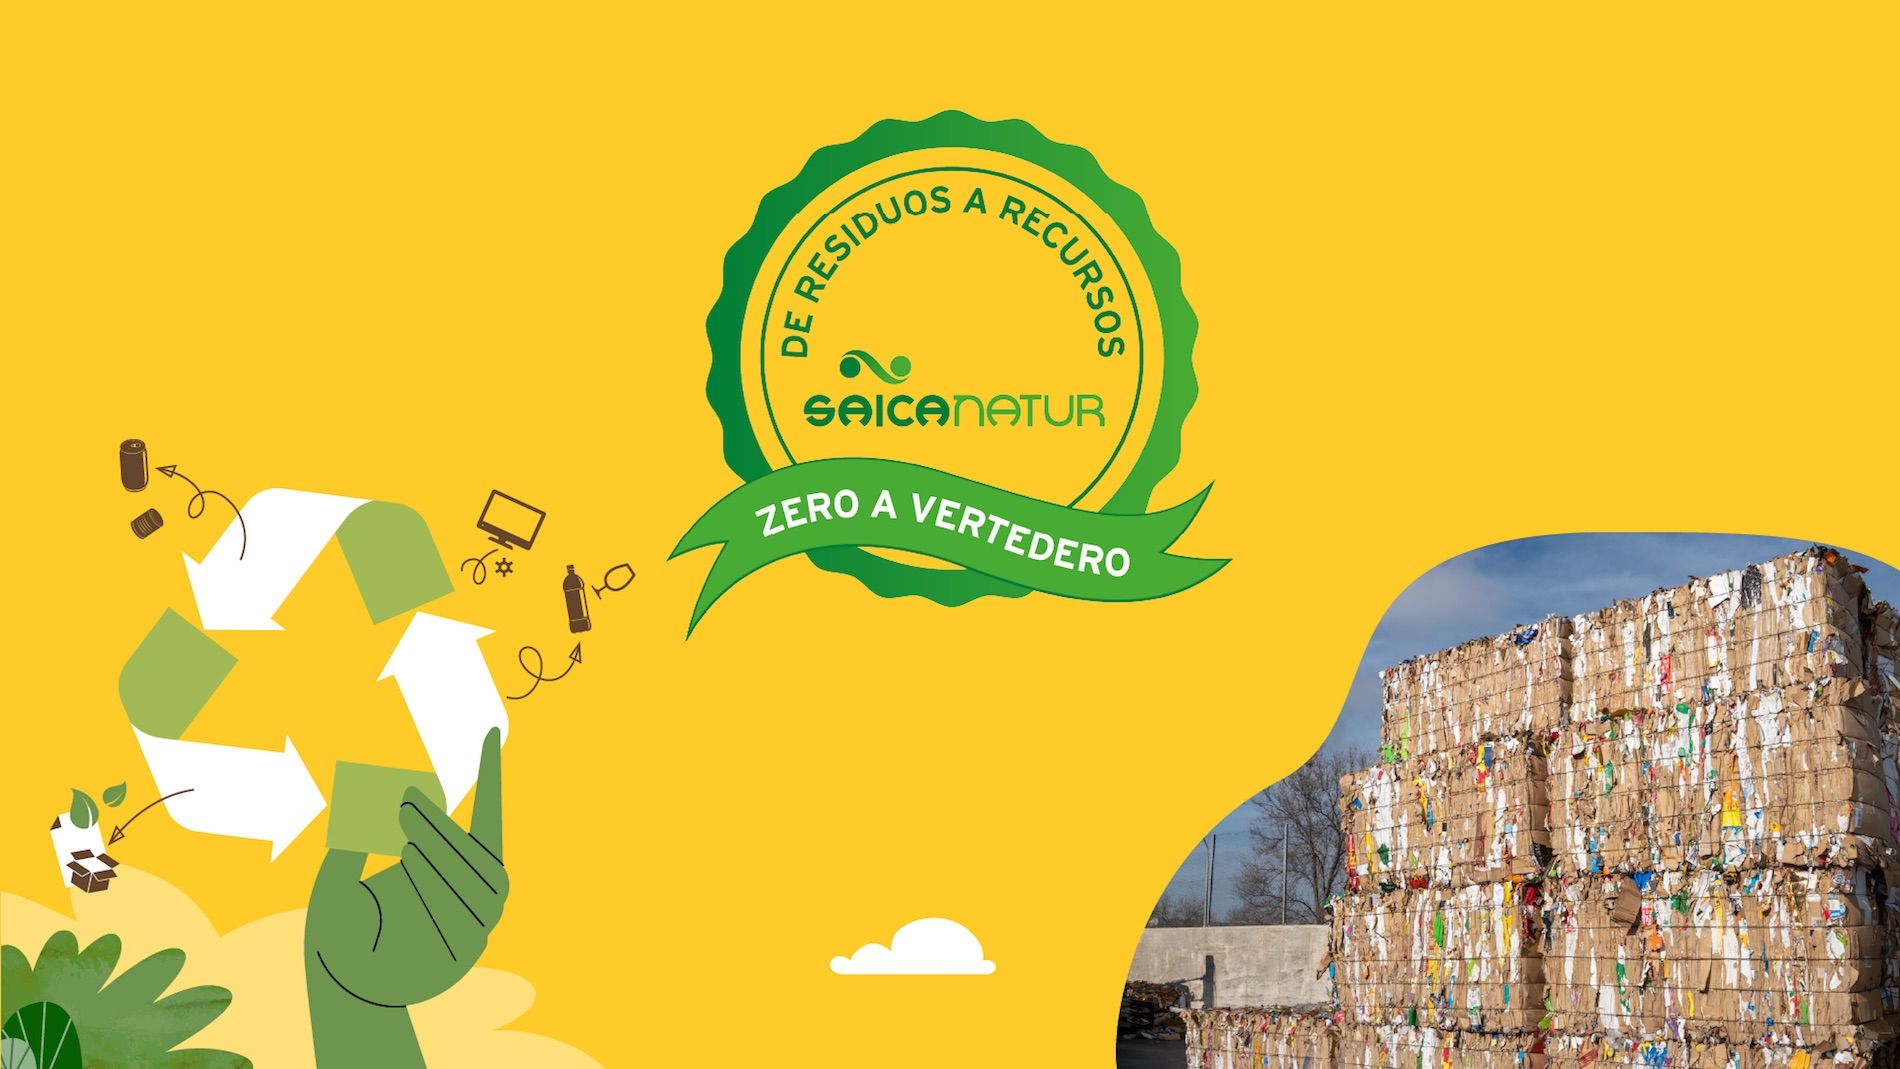 Ahorramas ha obtenido el sello ‘De Residuos a Recursos: Zero a Vertedero’ de Saica Natur.